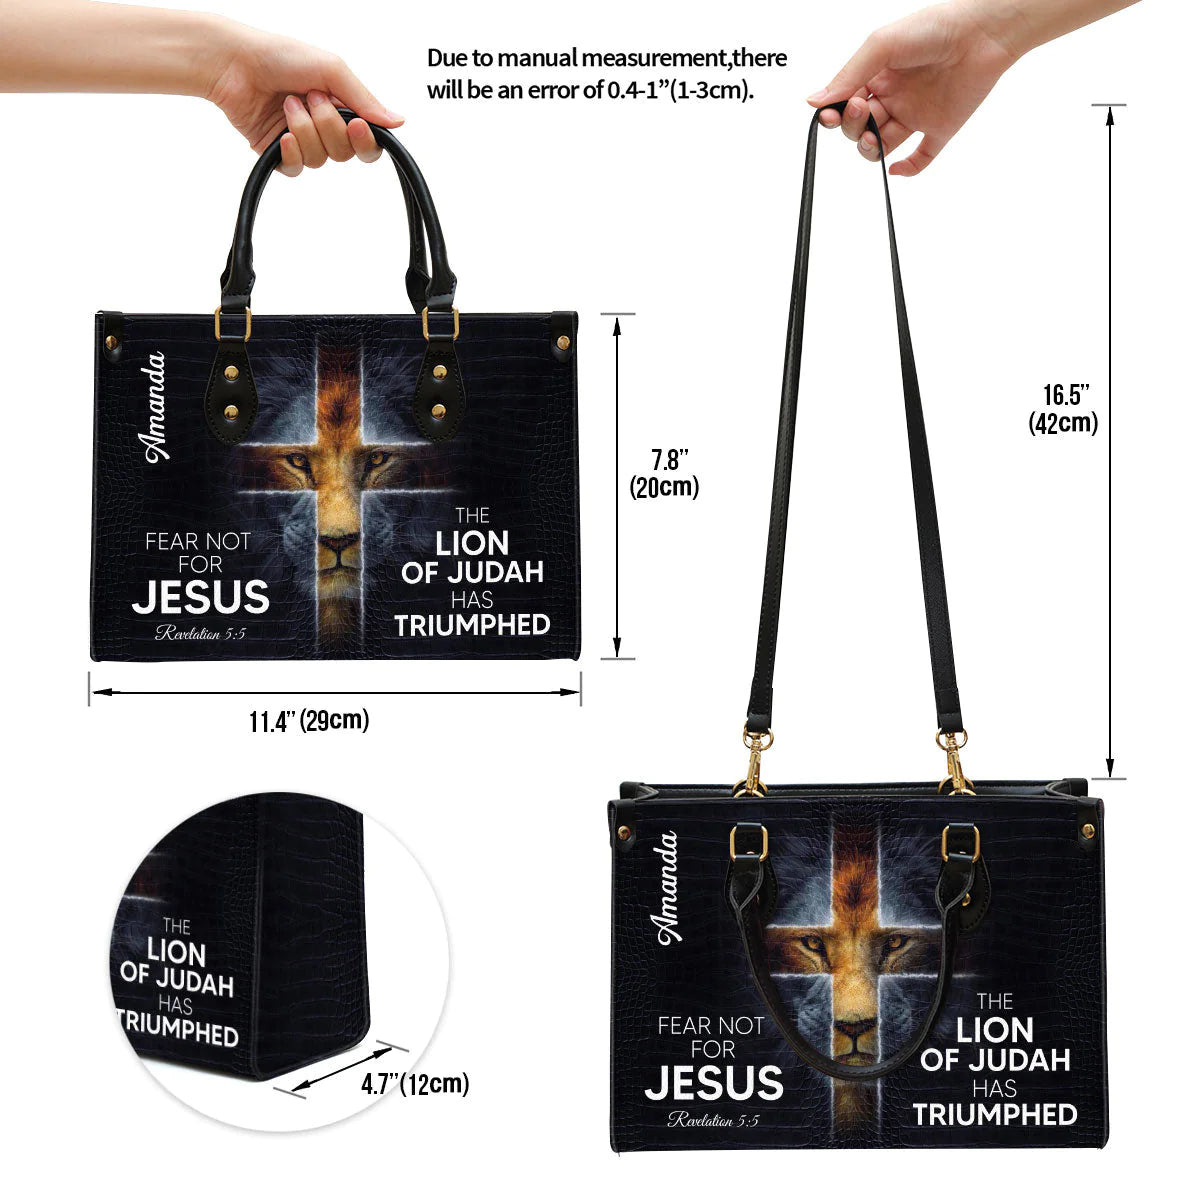 Christianartbag Handbag, The Lion Of Judah Has Triumphed Leather Handbag, Personalized Gifts, Gifts for Women, Christmas Gift. - Christian Art Bag